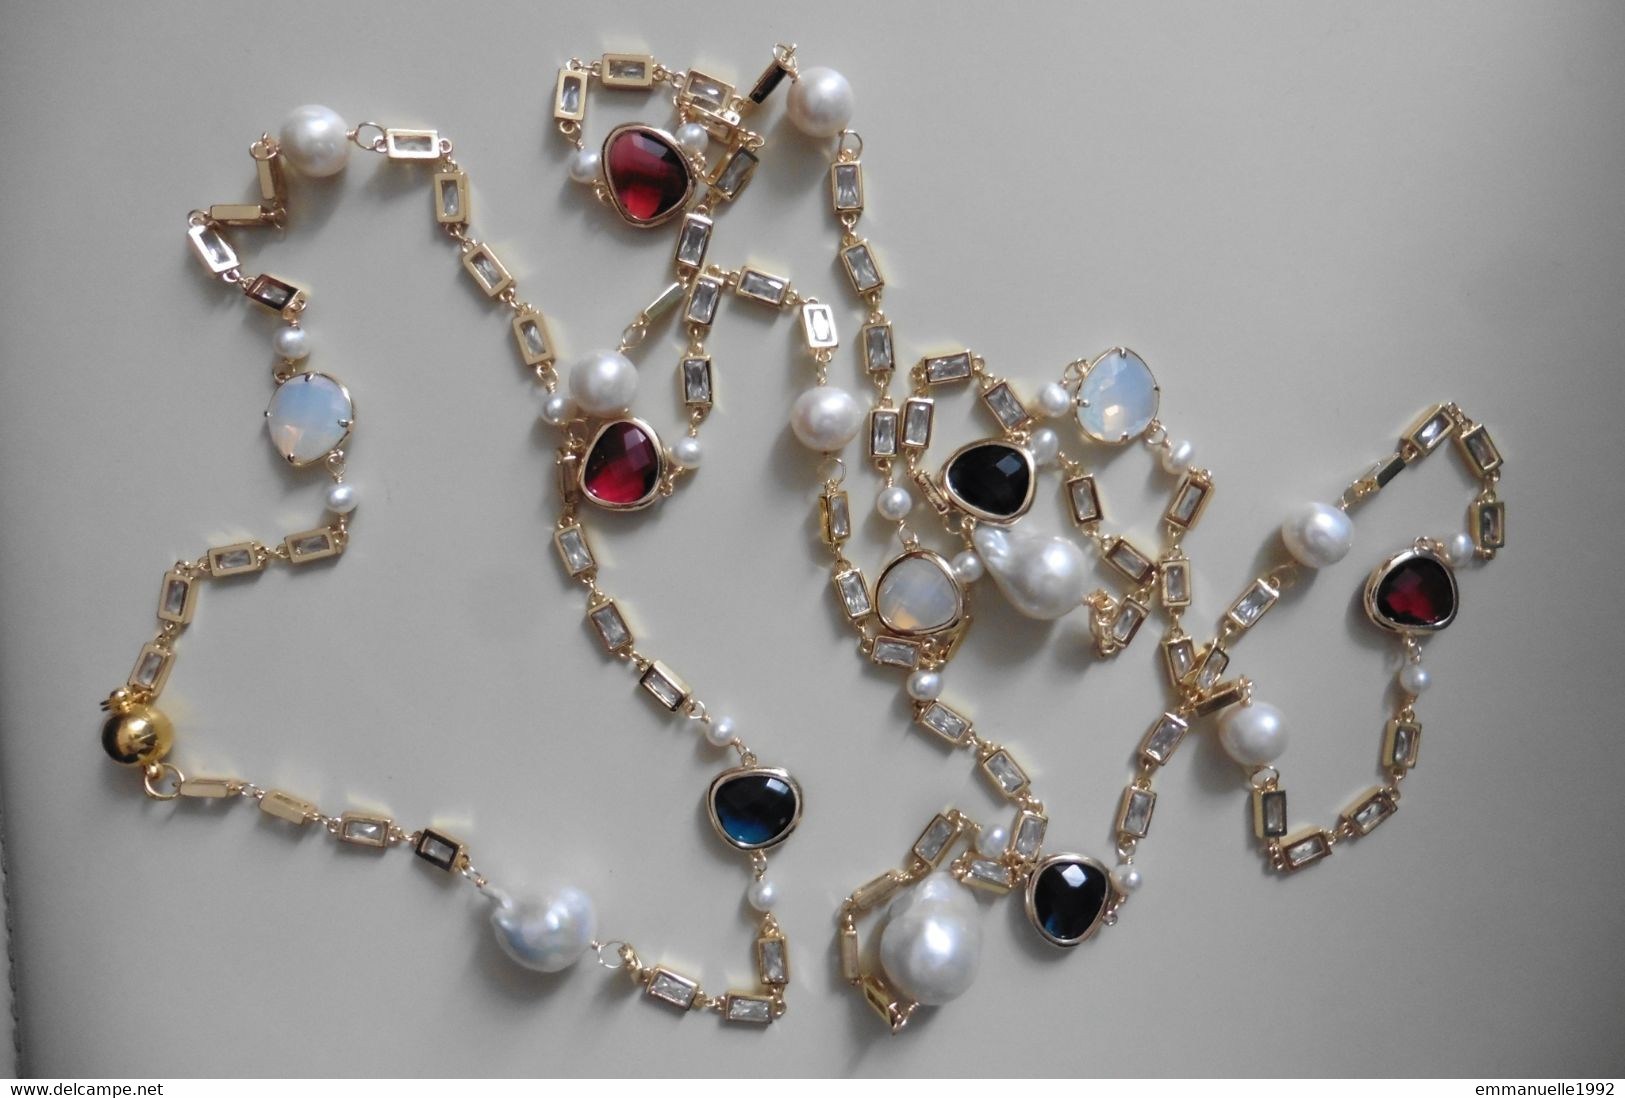 Neuf - Collier Sautoir Style Couture Perles Baroques Eau Douce Cristaux Strass - Colliers/Chaînes